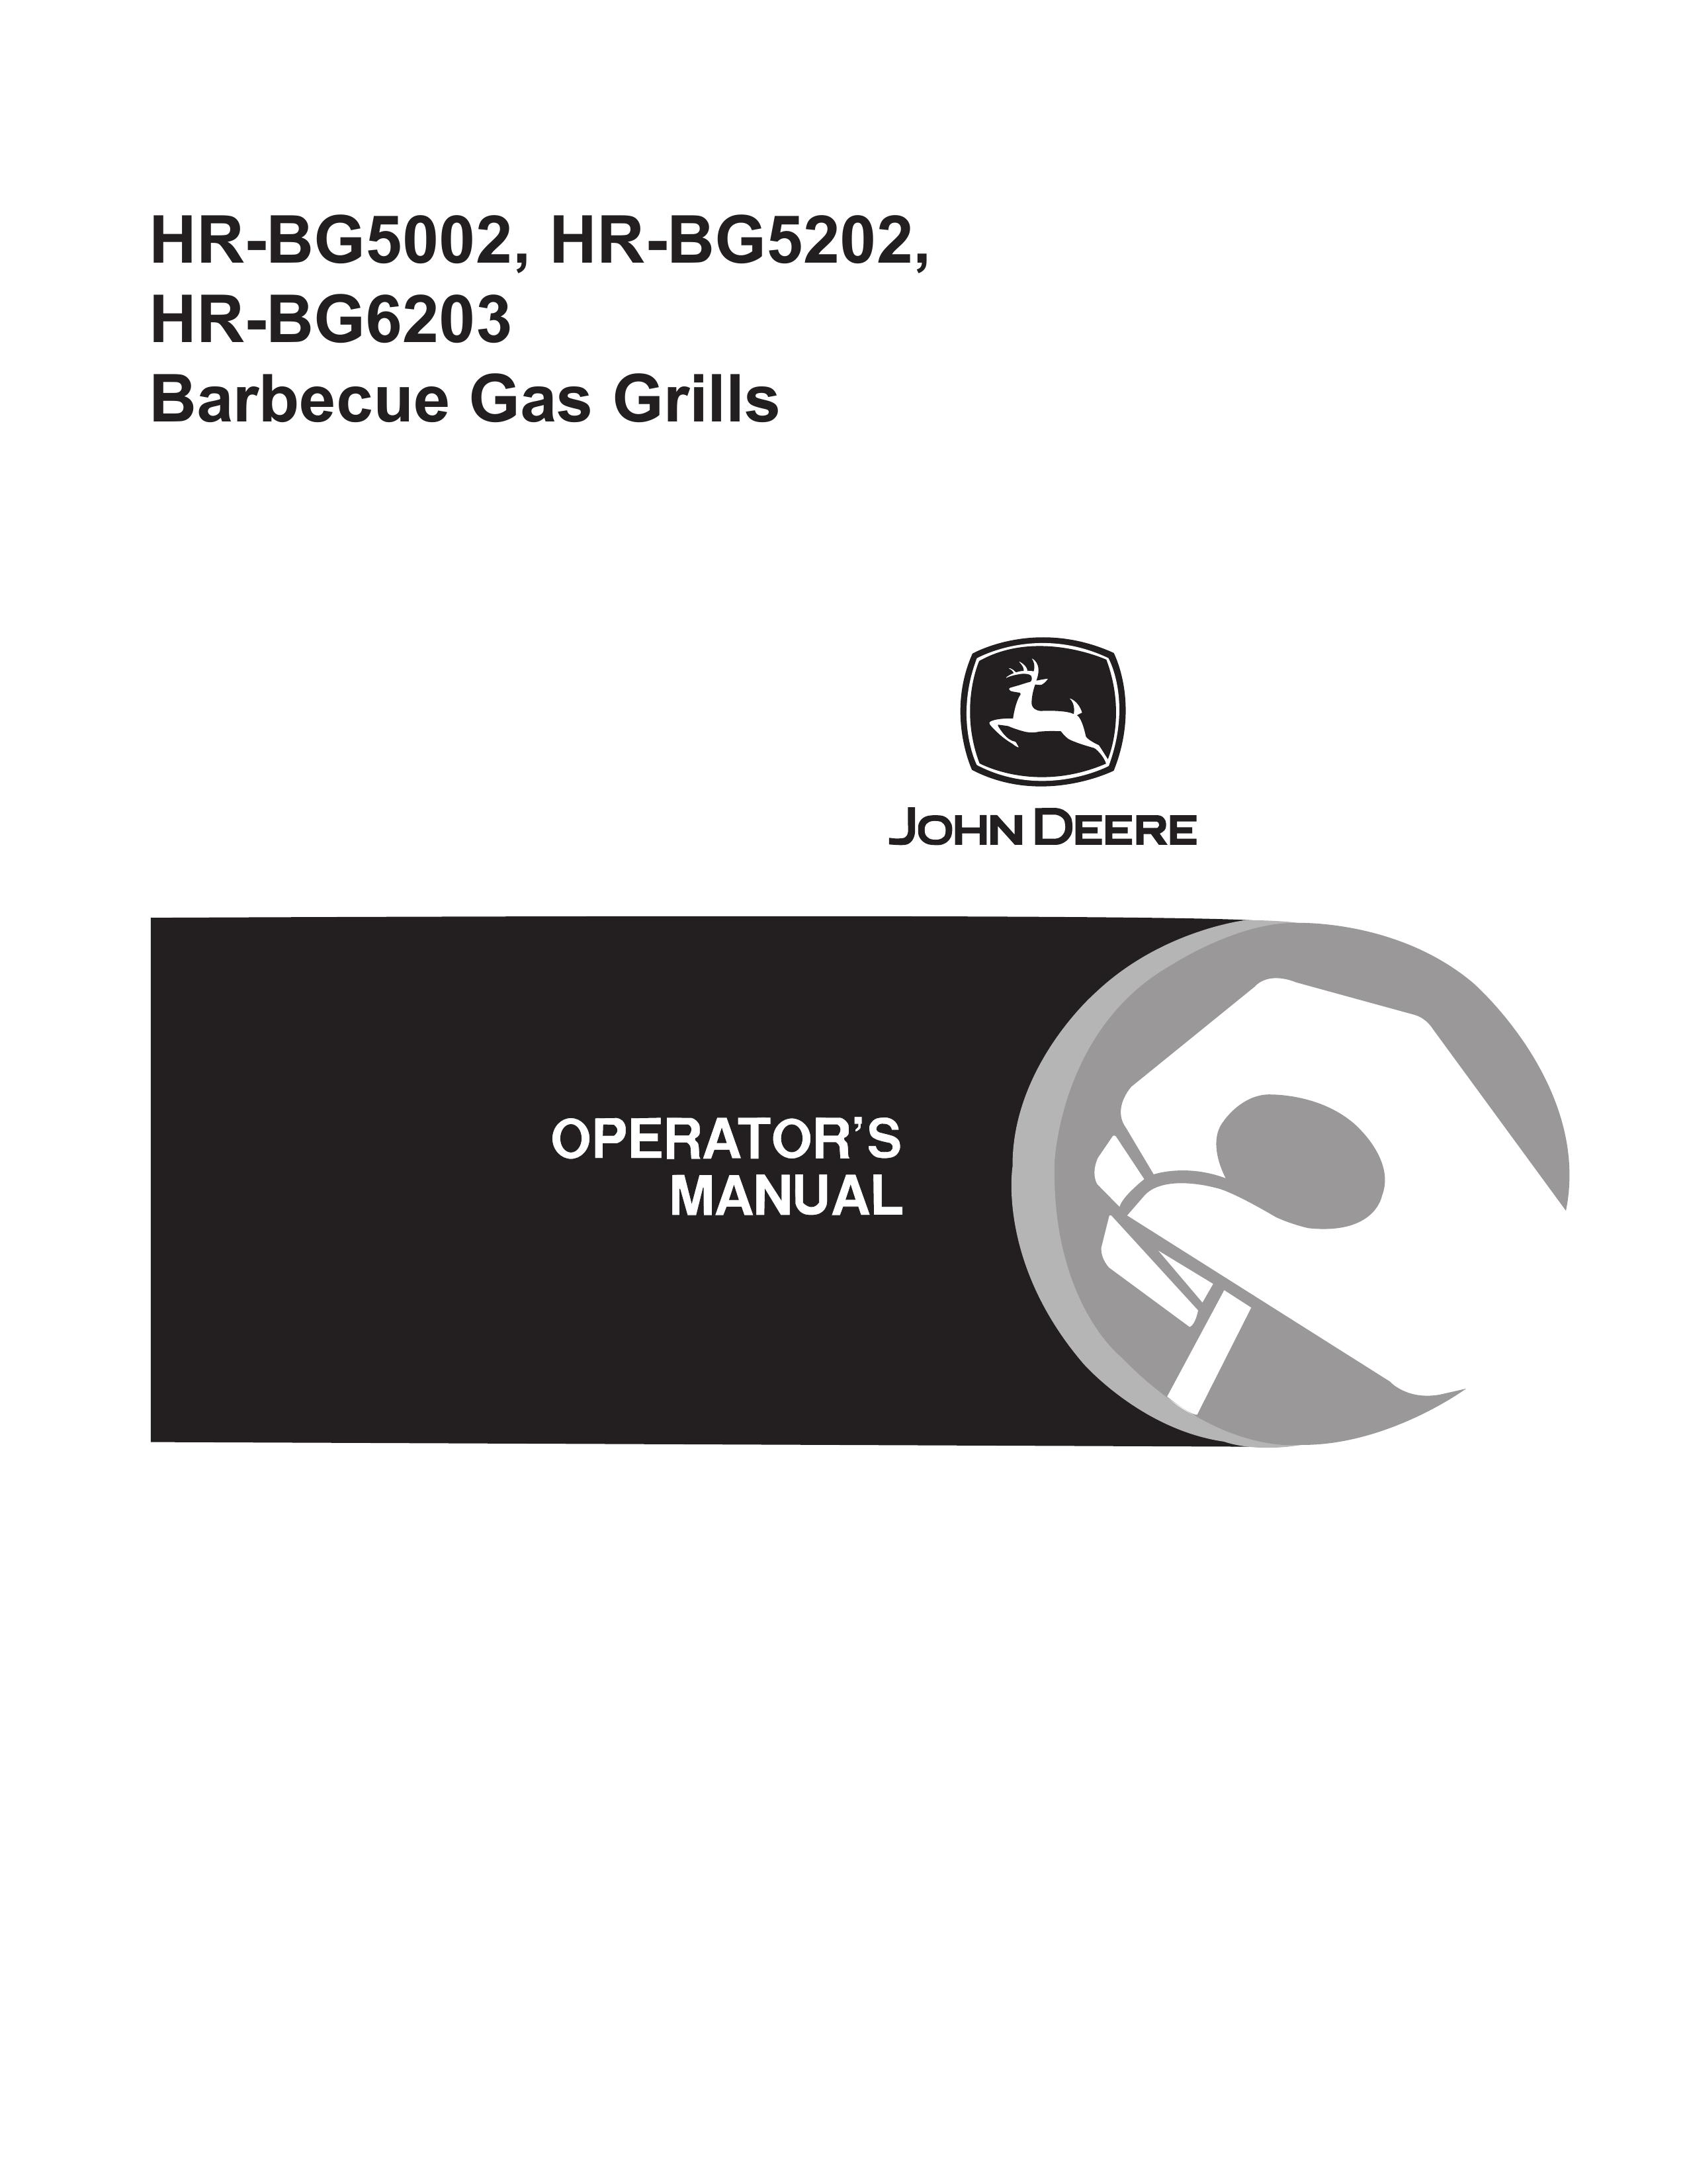 John Deere HR-BG5002, HR-BG5202, HR-BG6203 Gas Grill User Manual